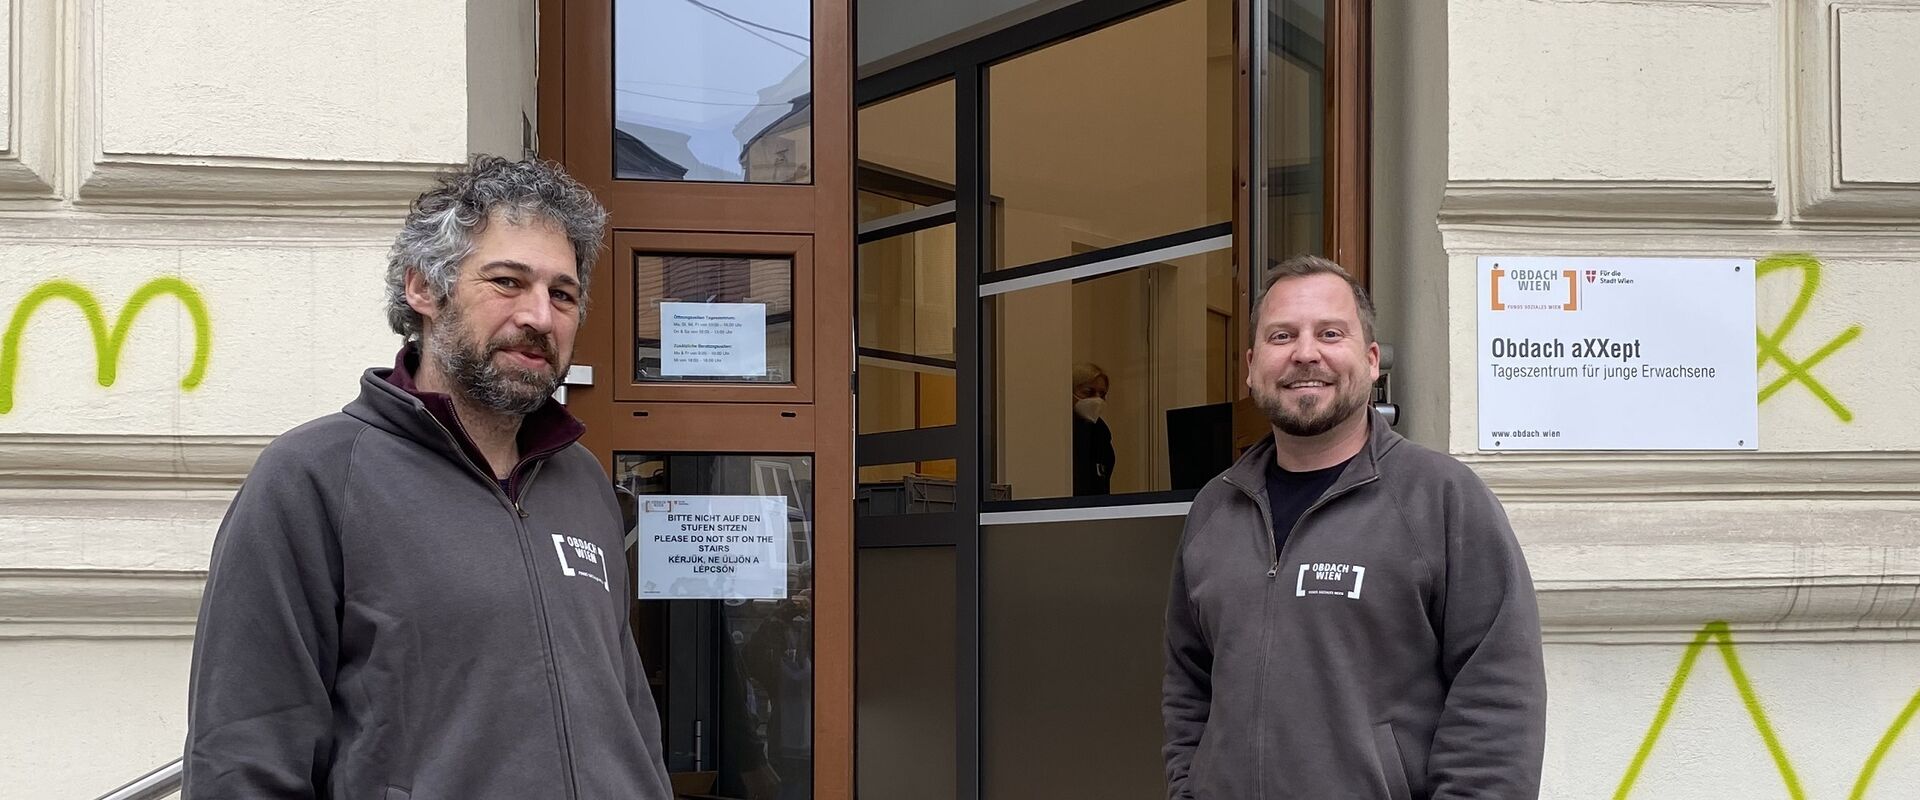 Teamleiter Jaschar Randjbar und Florian Rossmann vor dem neuen Standort des Obdach aXXept.